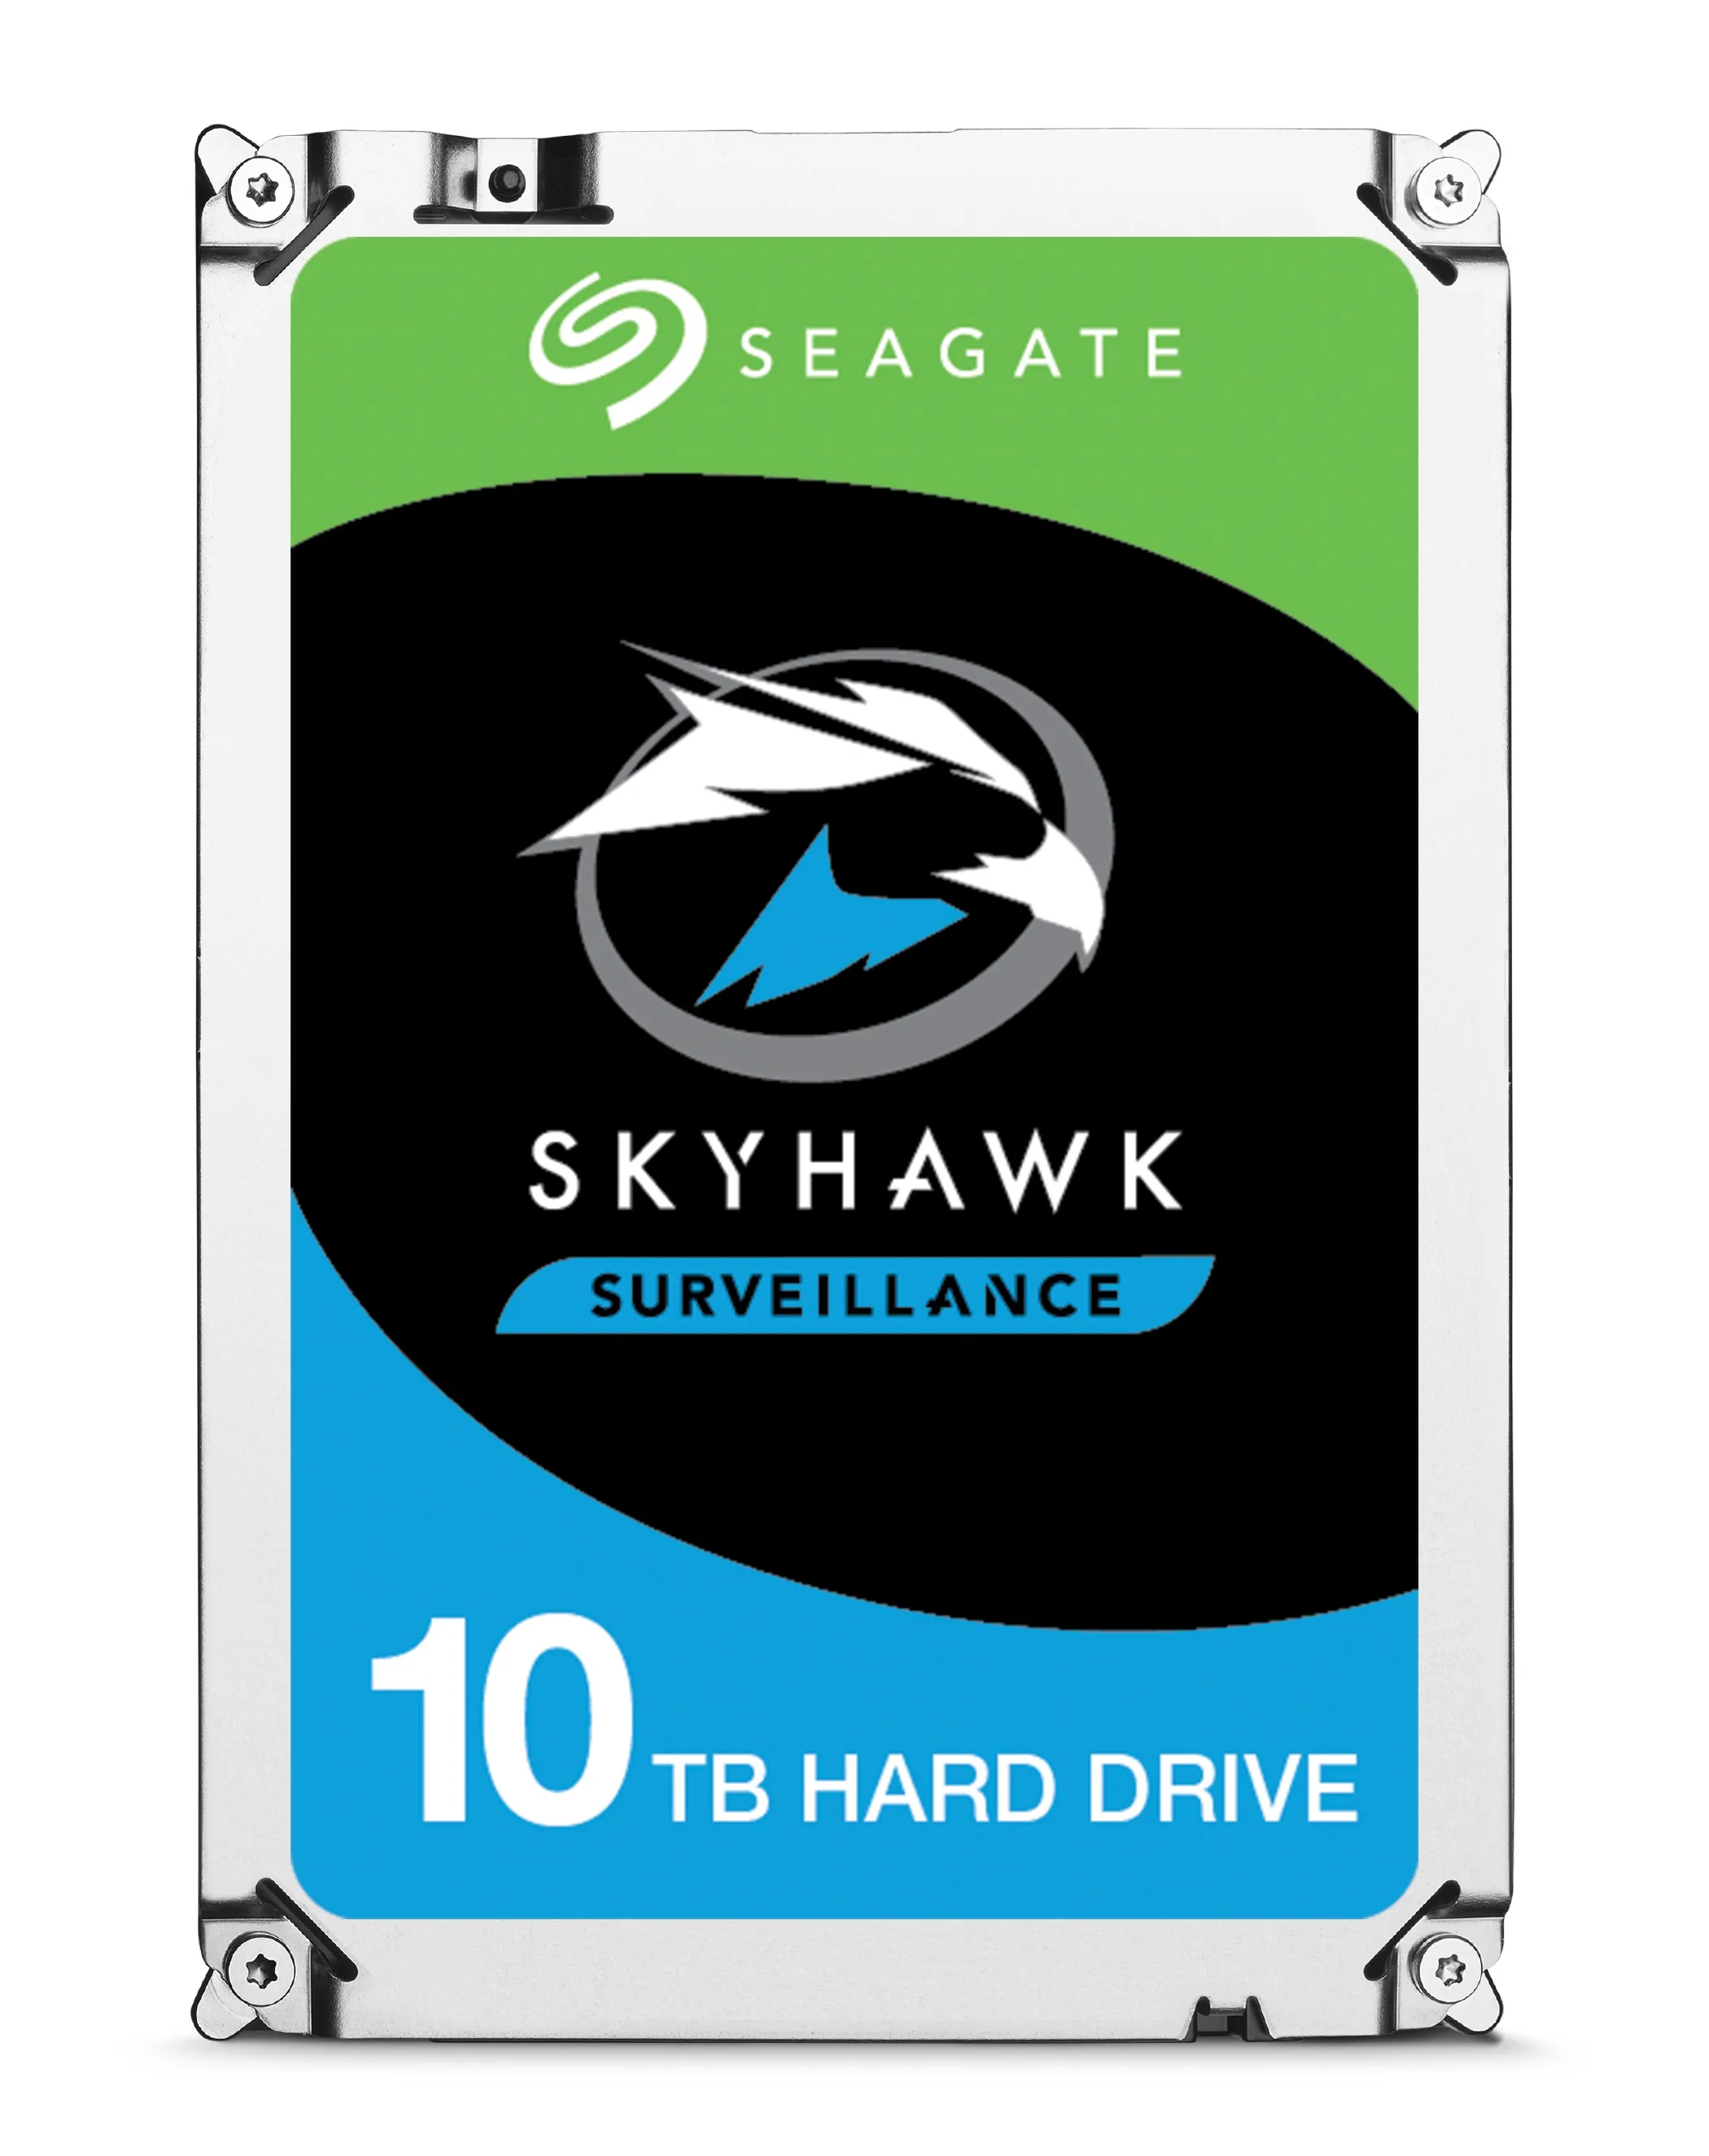 Vente Seagate SkyHawk AI Seagate au meilleur prix - visuel 2